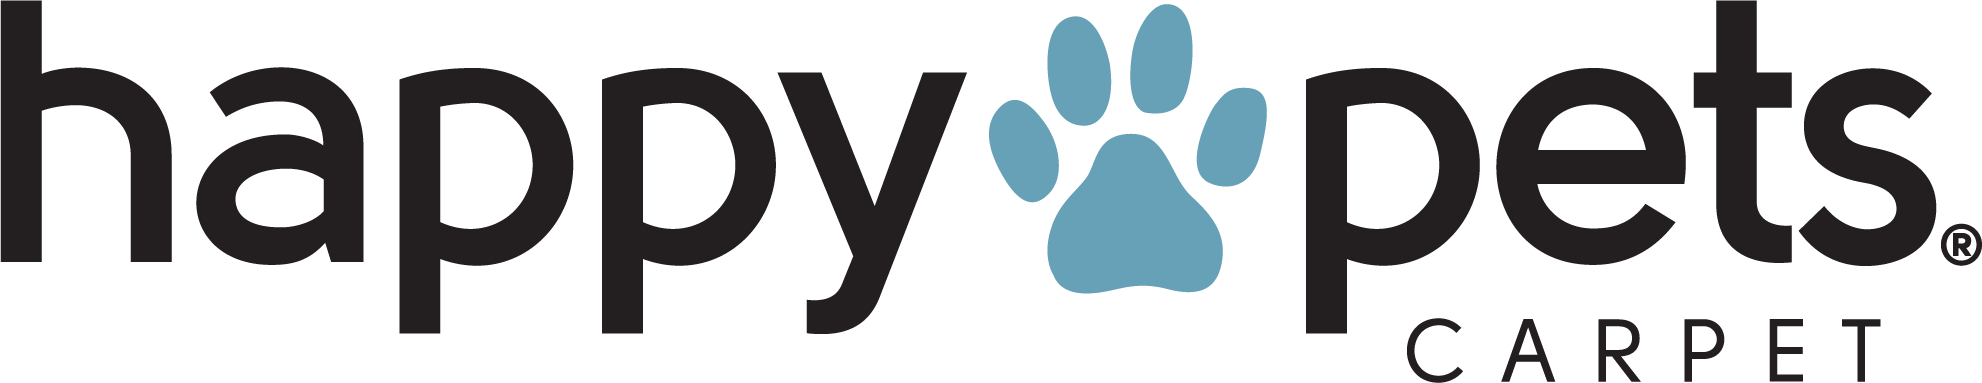 Pet Performance Happy Pets Logo | Floor Coverings of Winona